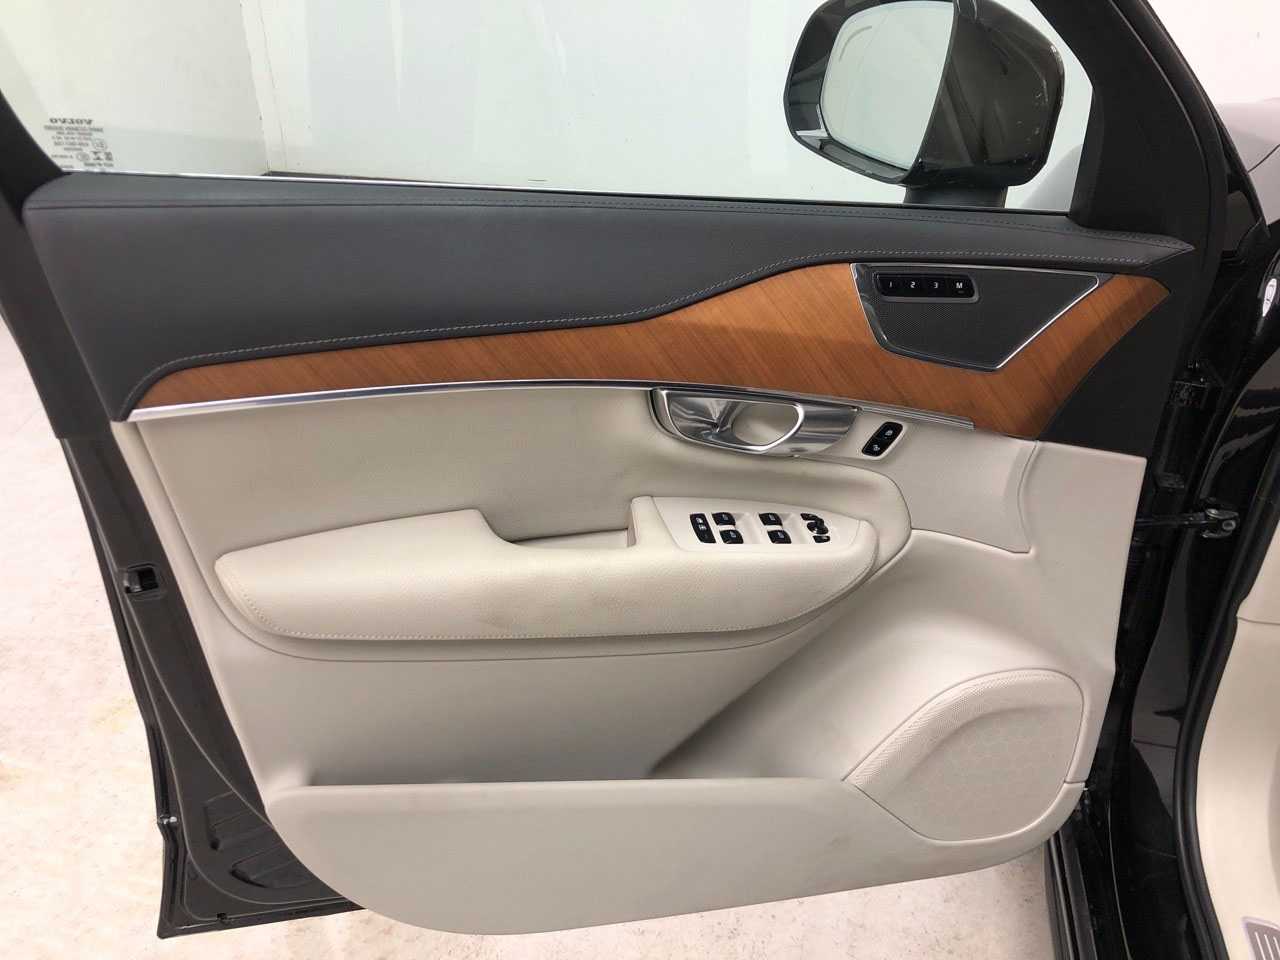 Volvo  XC90 Inscription, B5 AWD mild-hybrid, Siete asientos